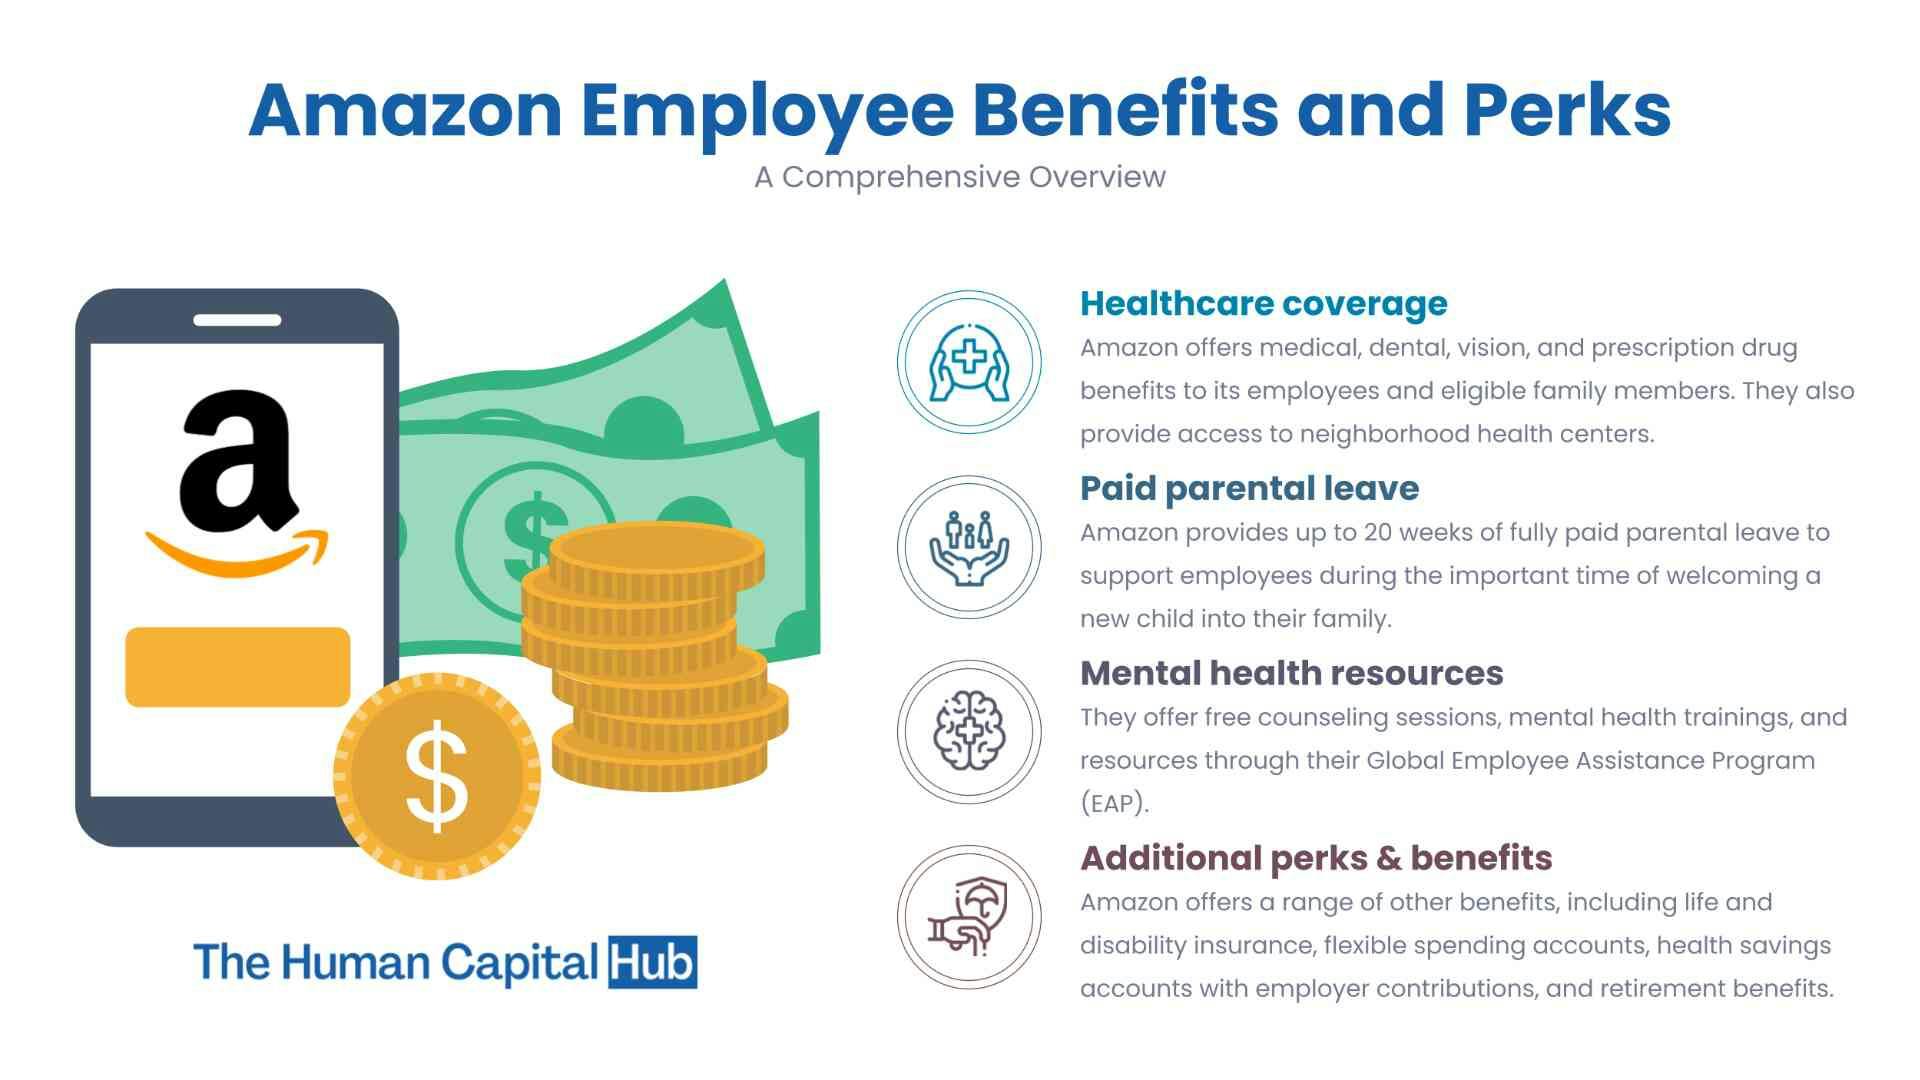 Amazon Employees Benefits and Perks